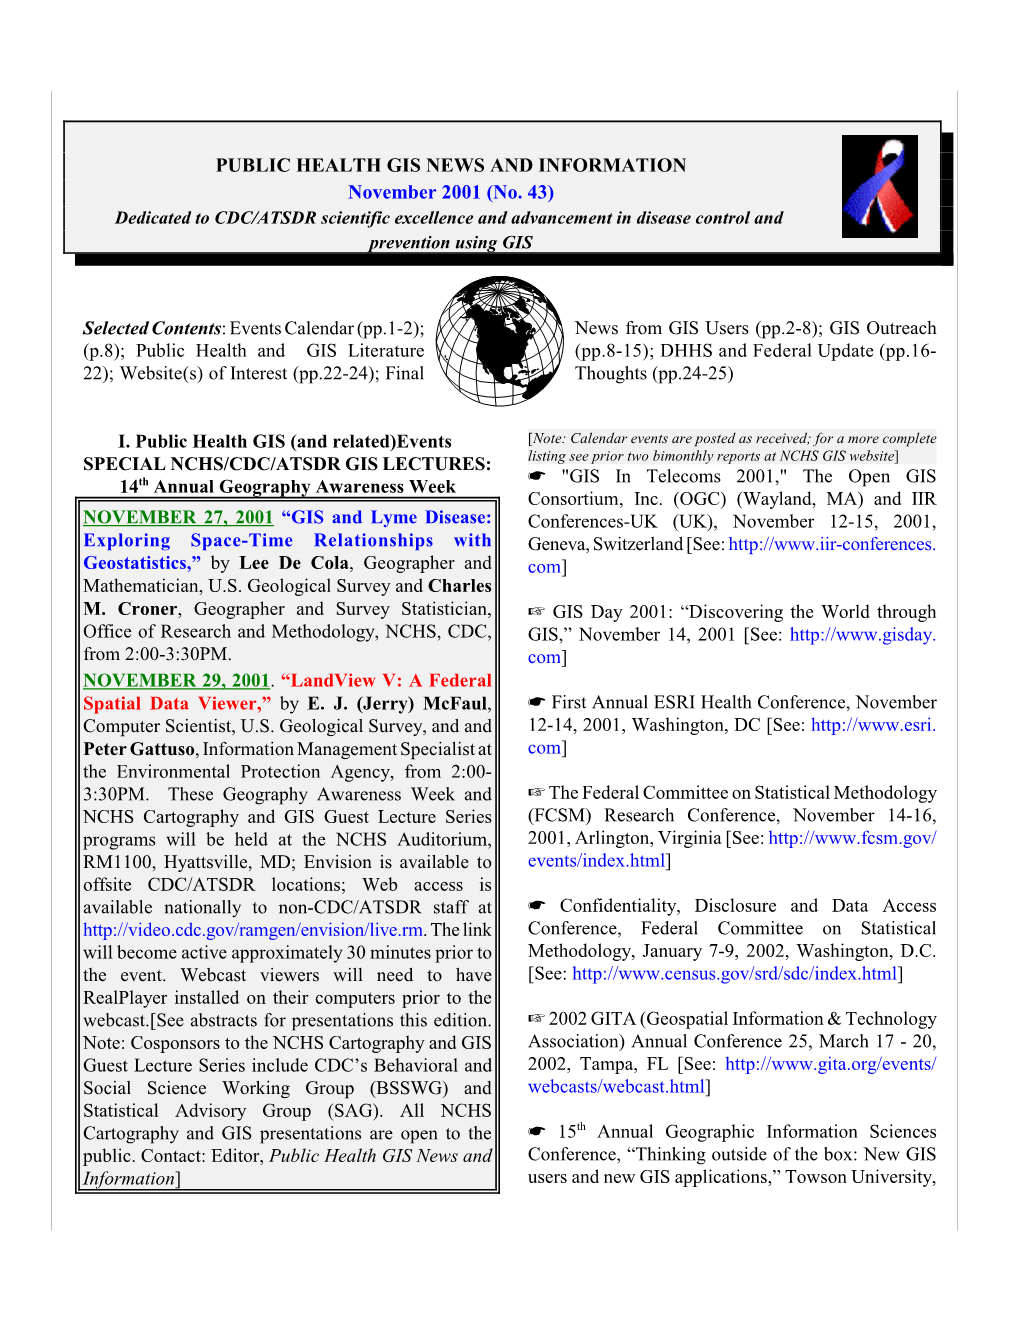 Public Health GIS News and Information, No. 43 (November 2001)